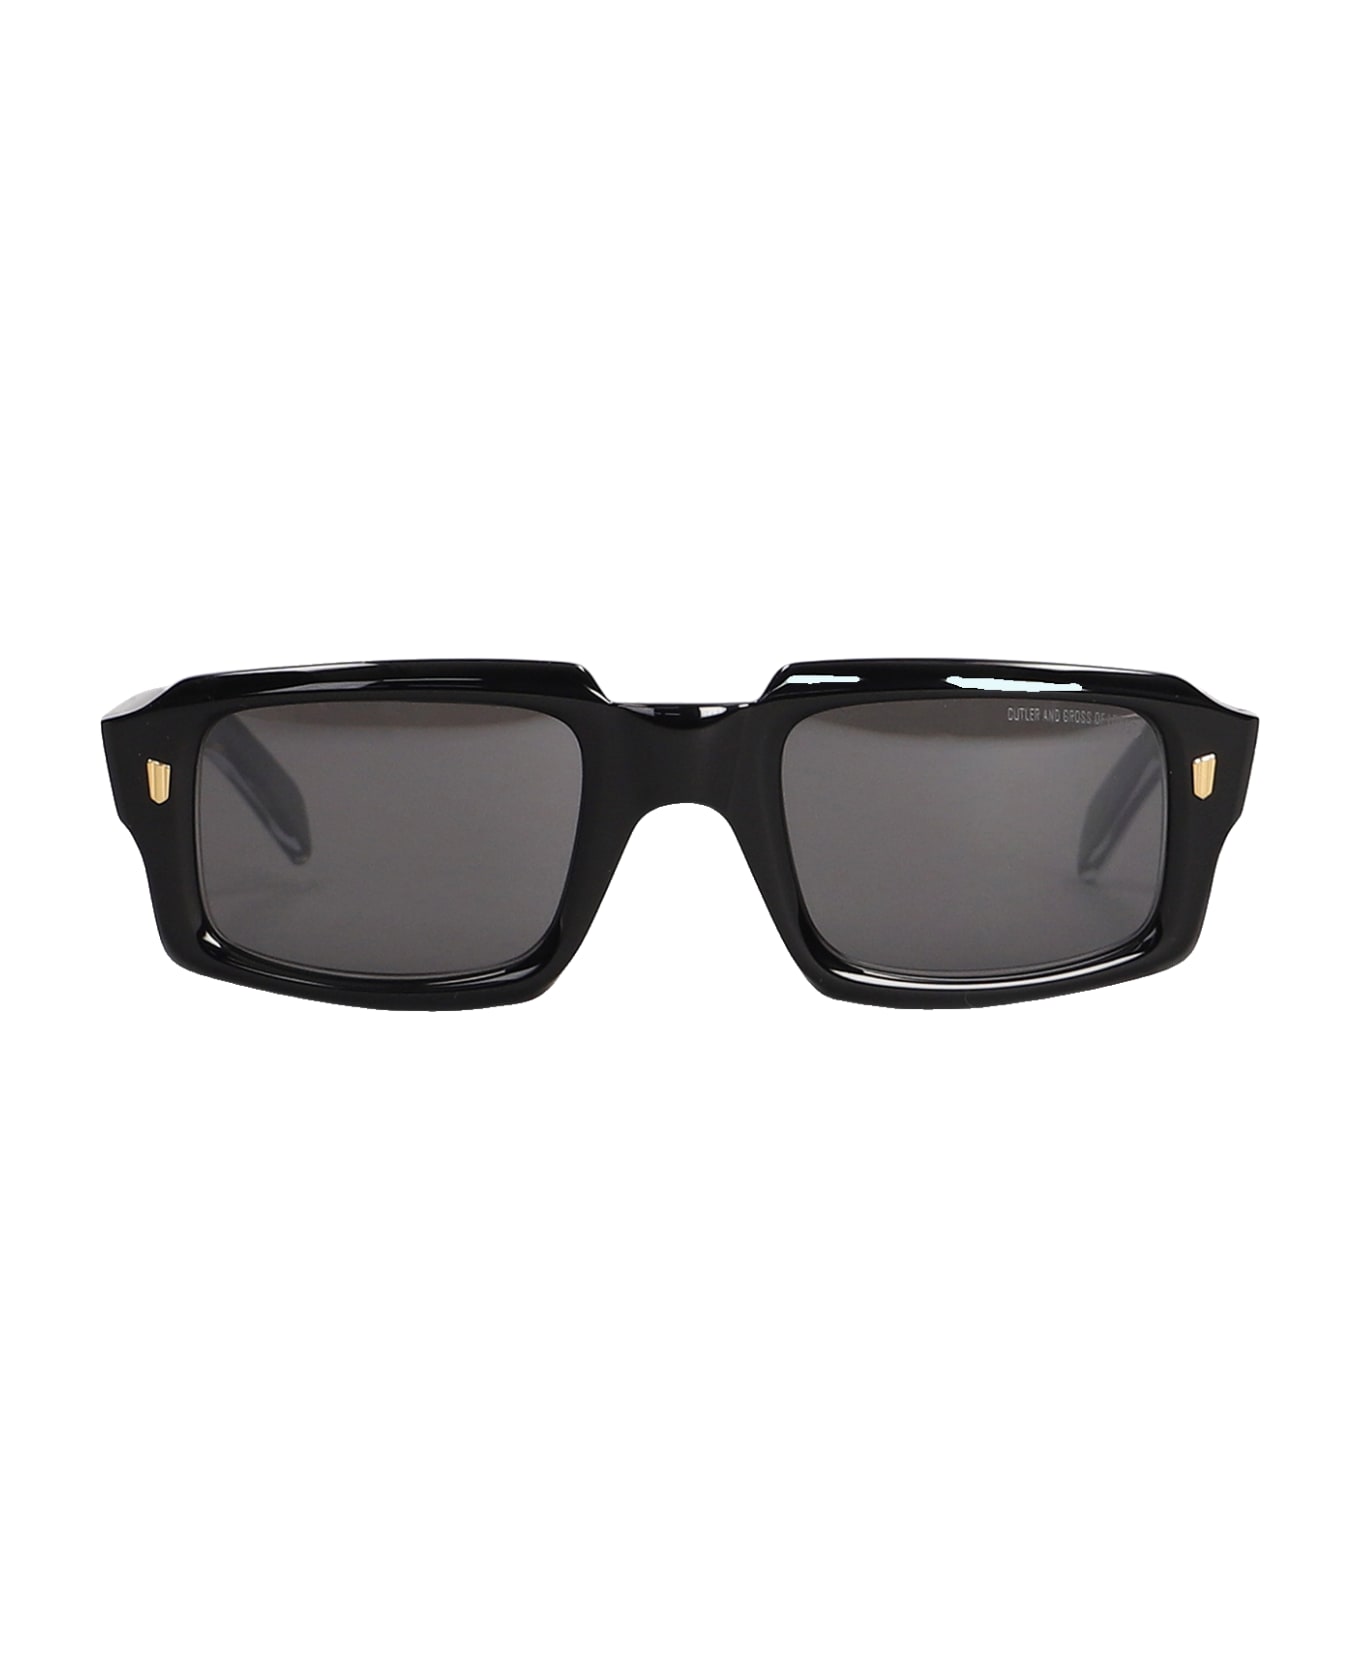 Cutler and Gross 9495 Sunglasses In Black Acetate - black